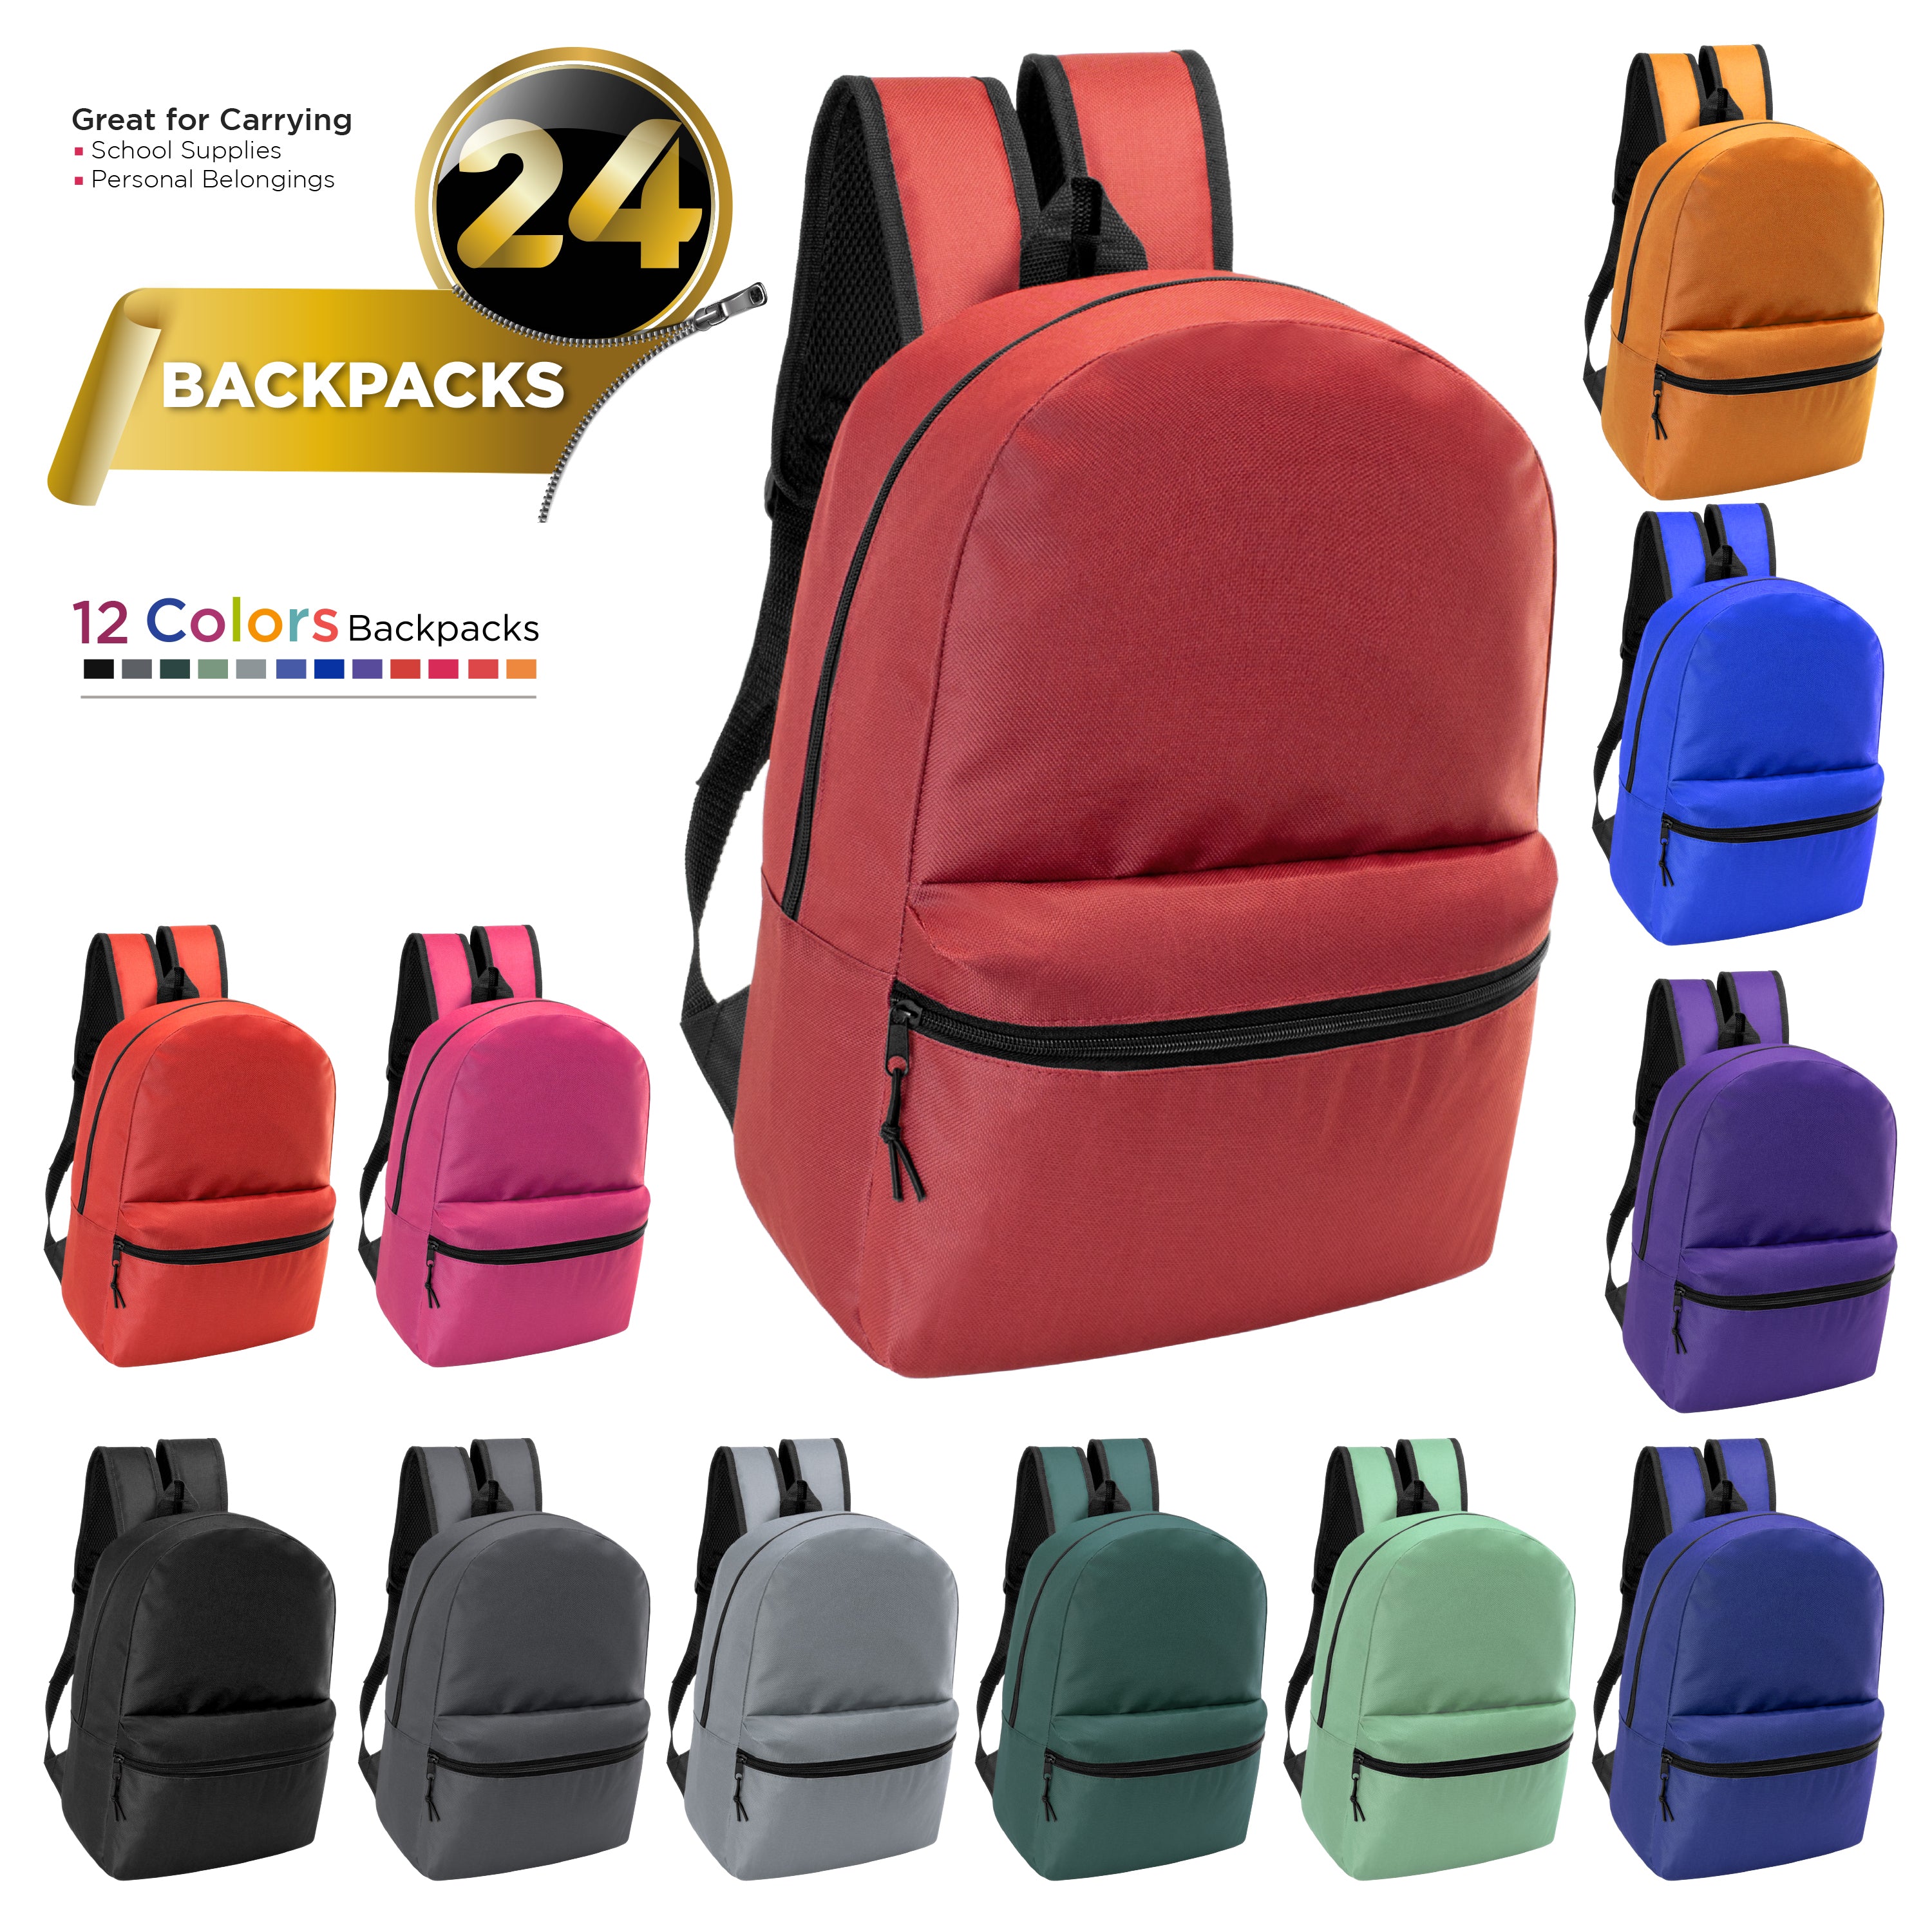 17" wholesale bulk backpacks for school donations